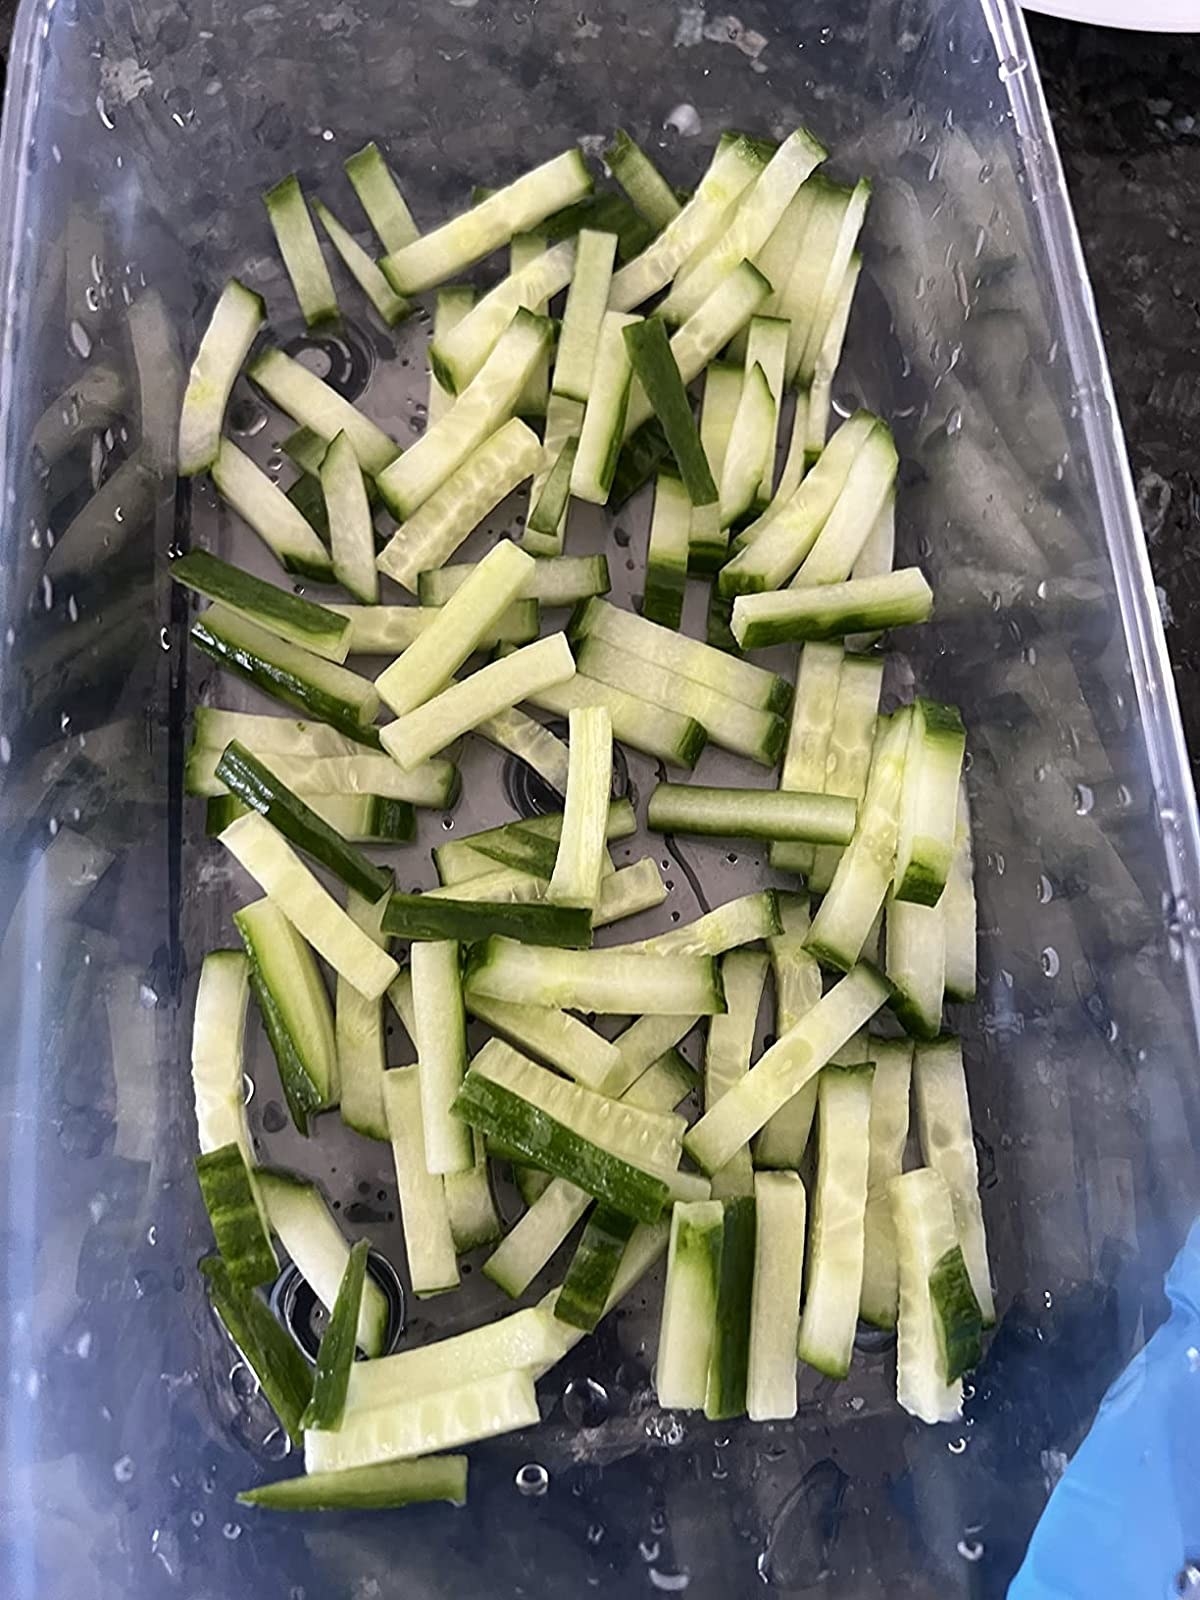 Chopped cucumbers